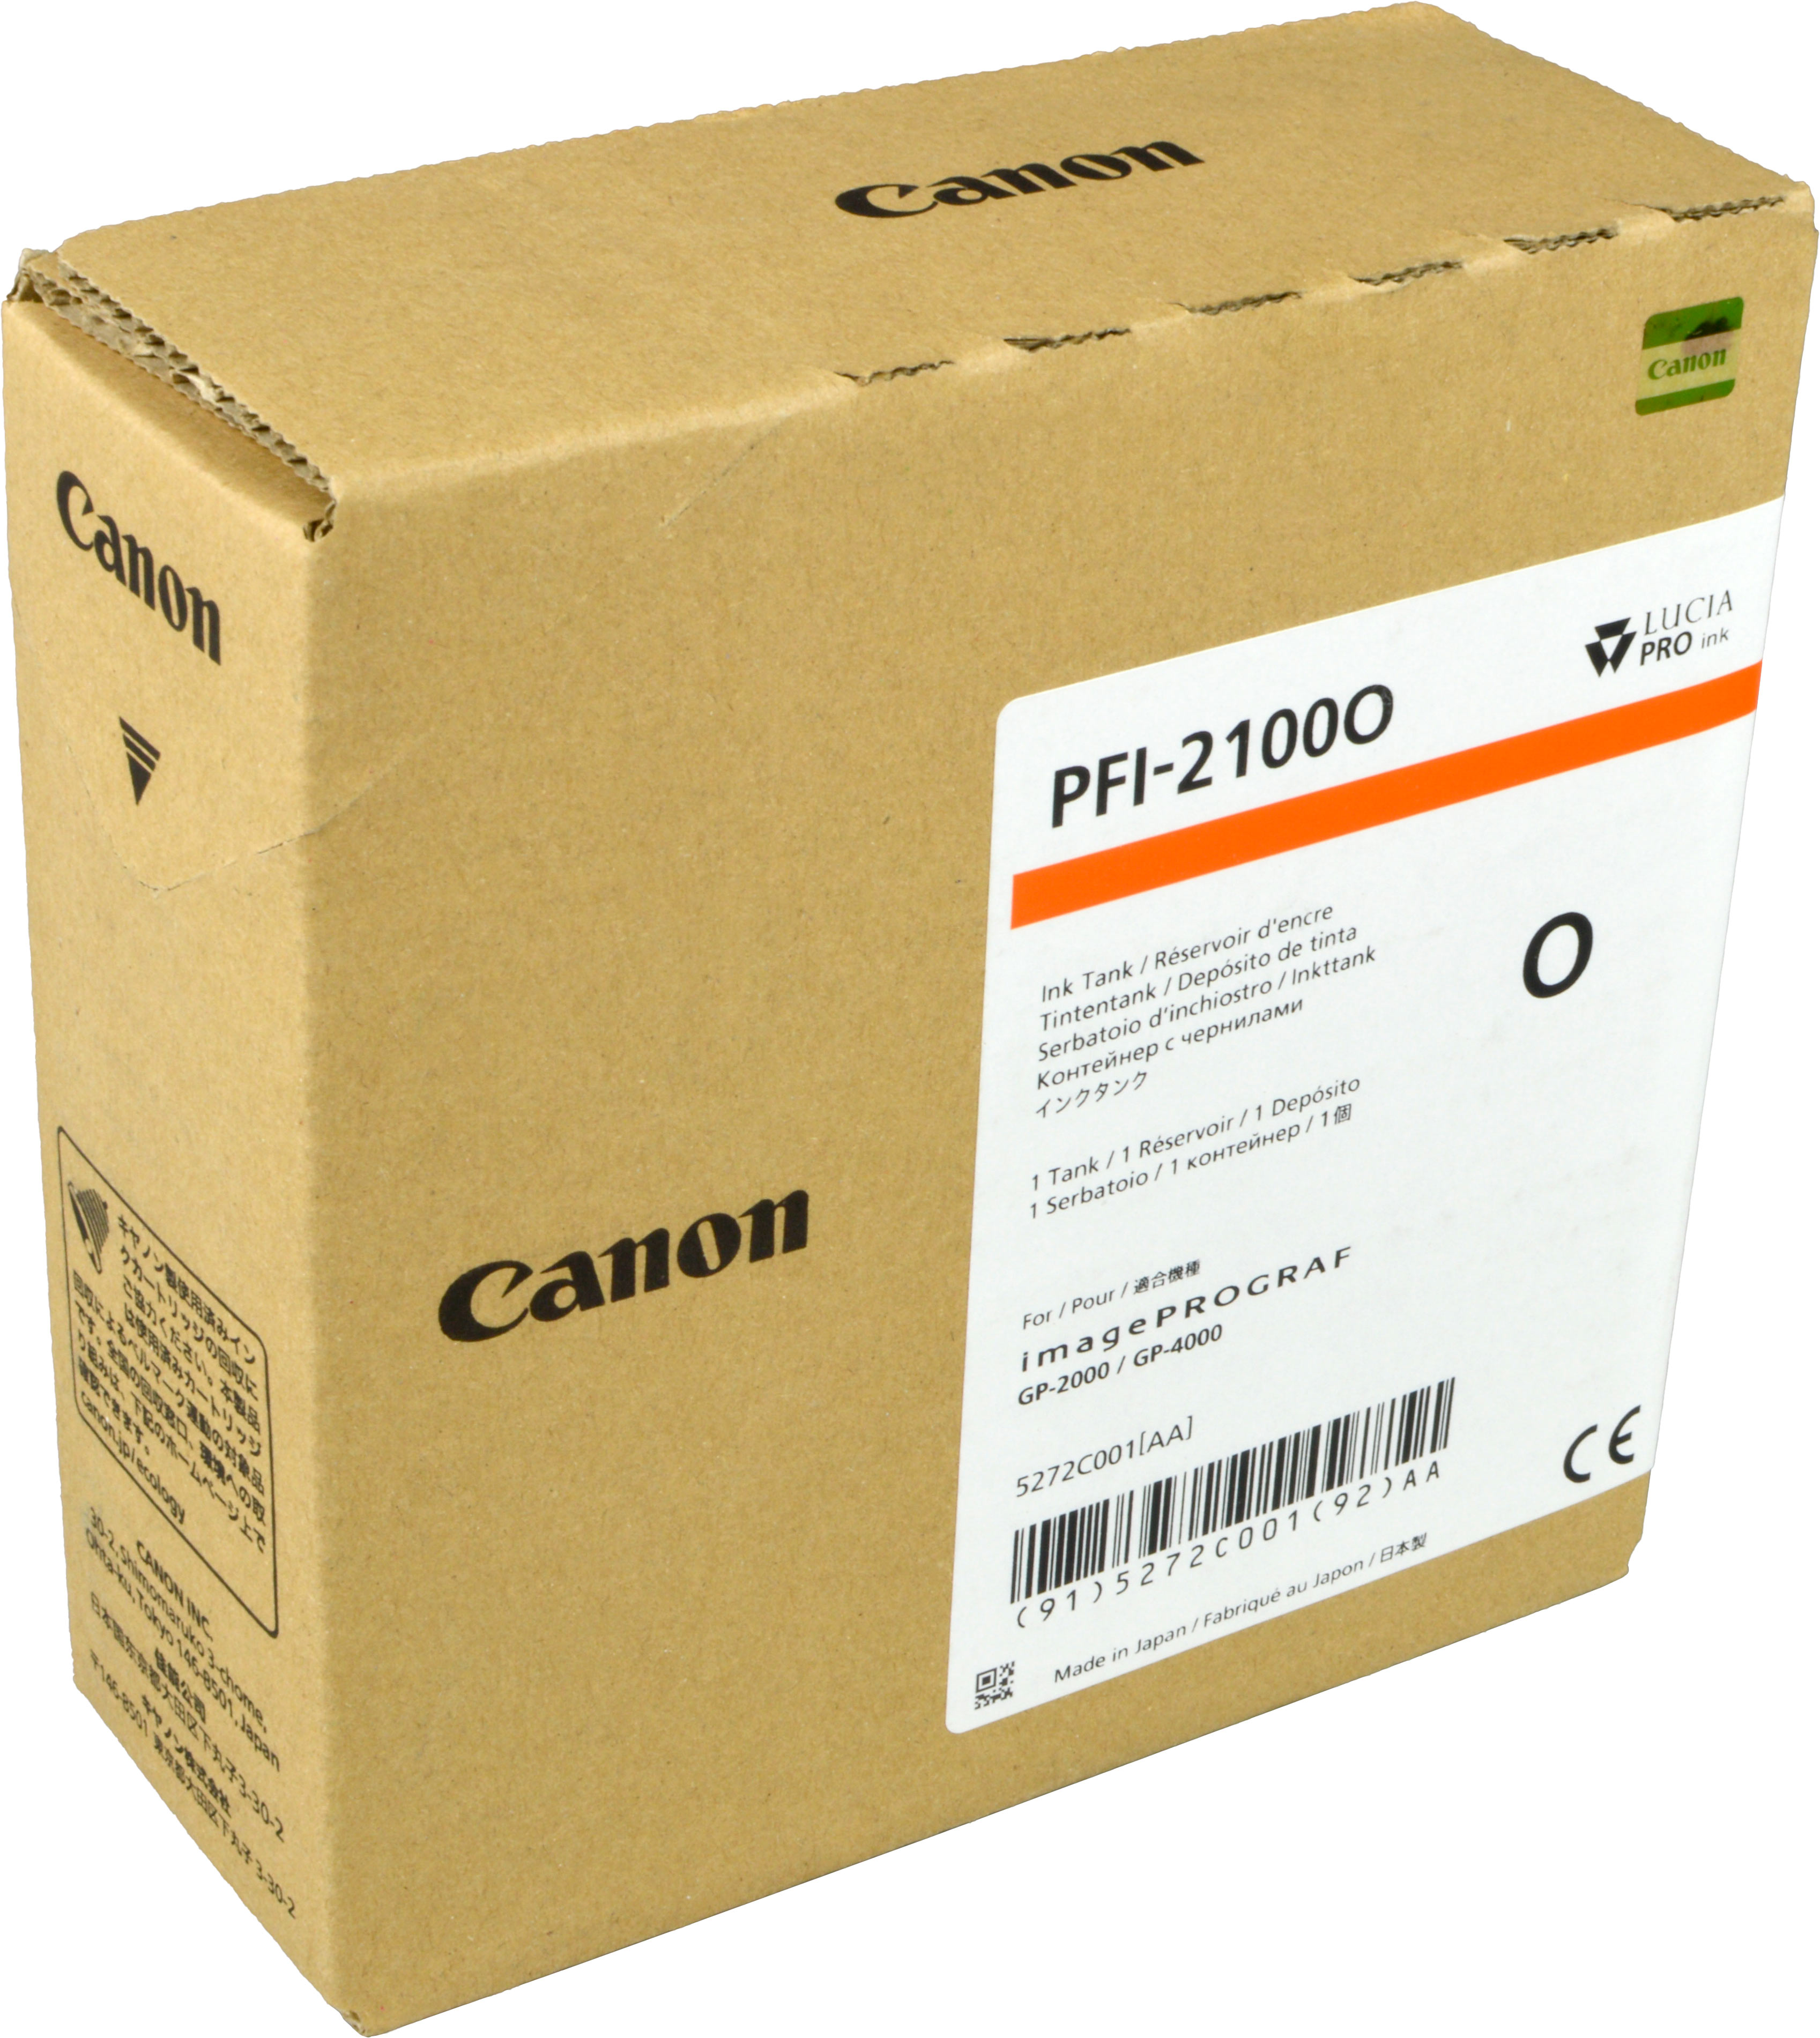 Canon Tinte 5272C001  PFI-2100O  orange